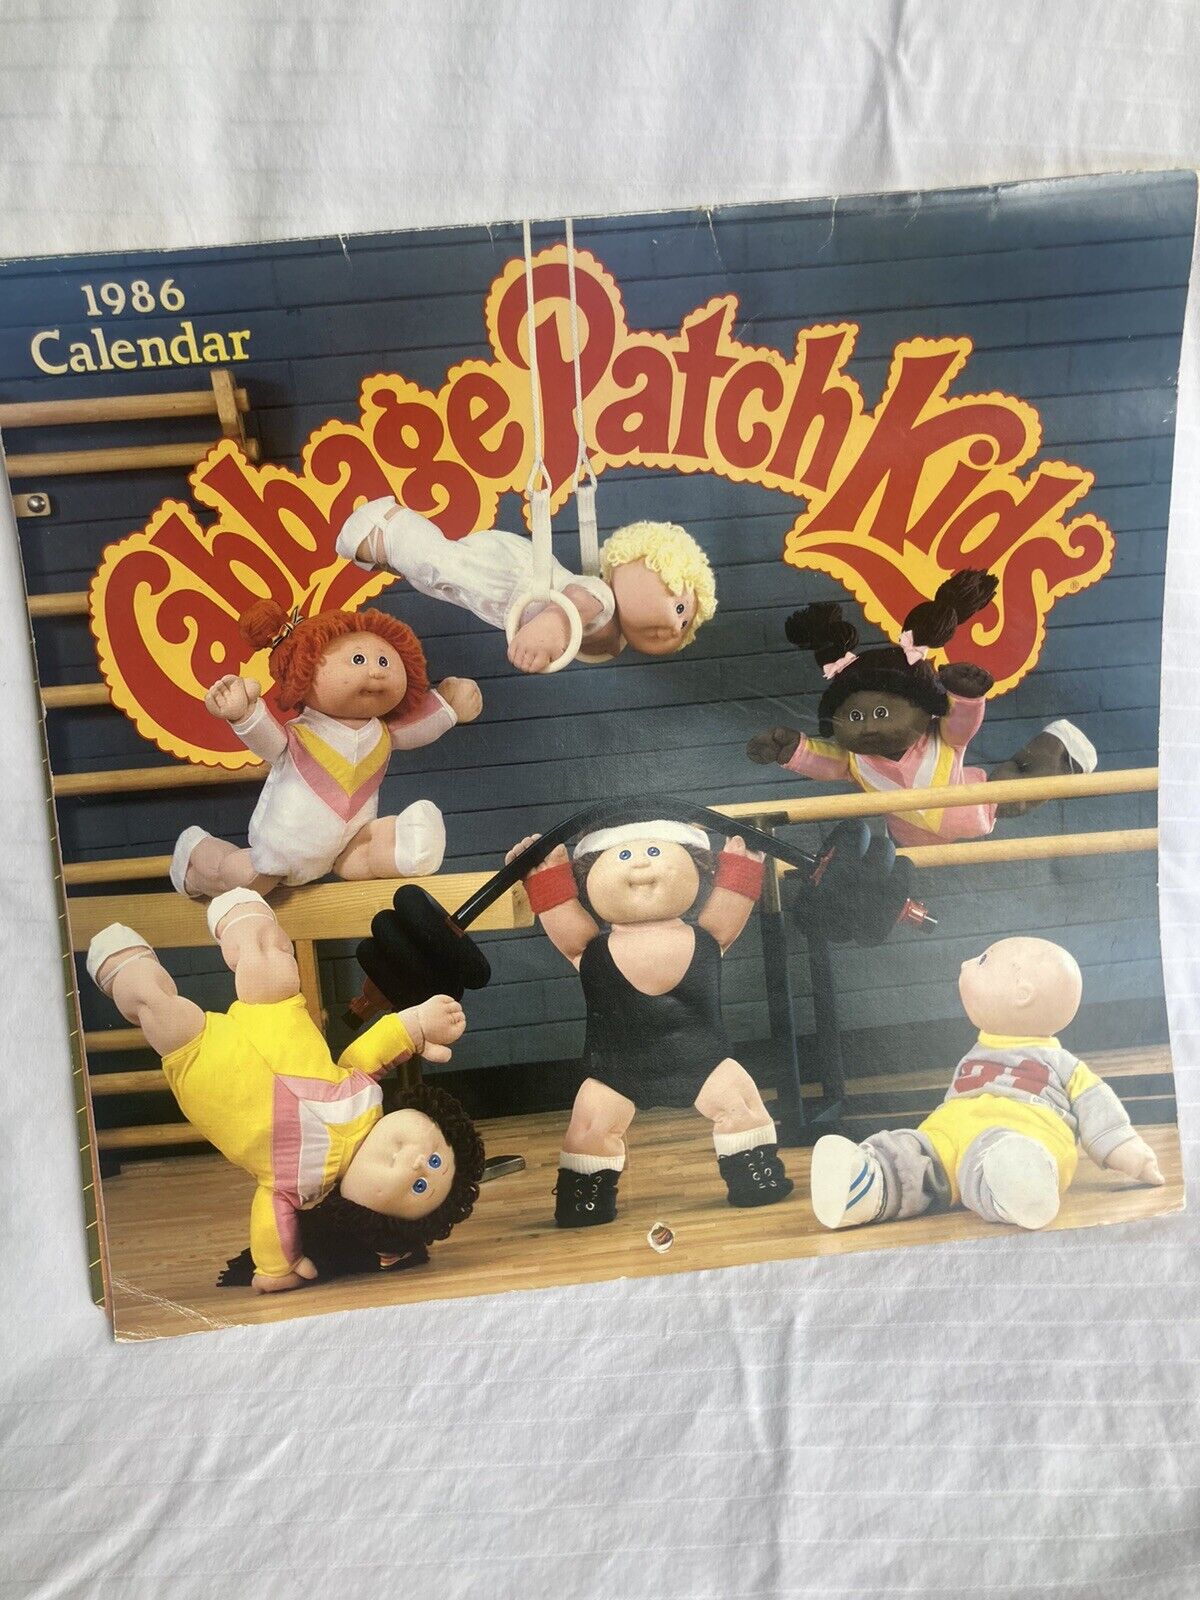 Vintage 1986 Cabbage Patch Kids Calendar